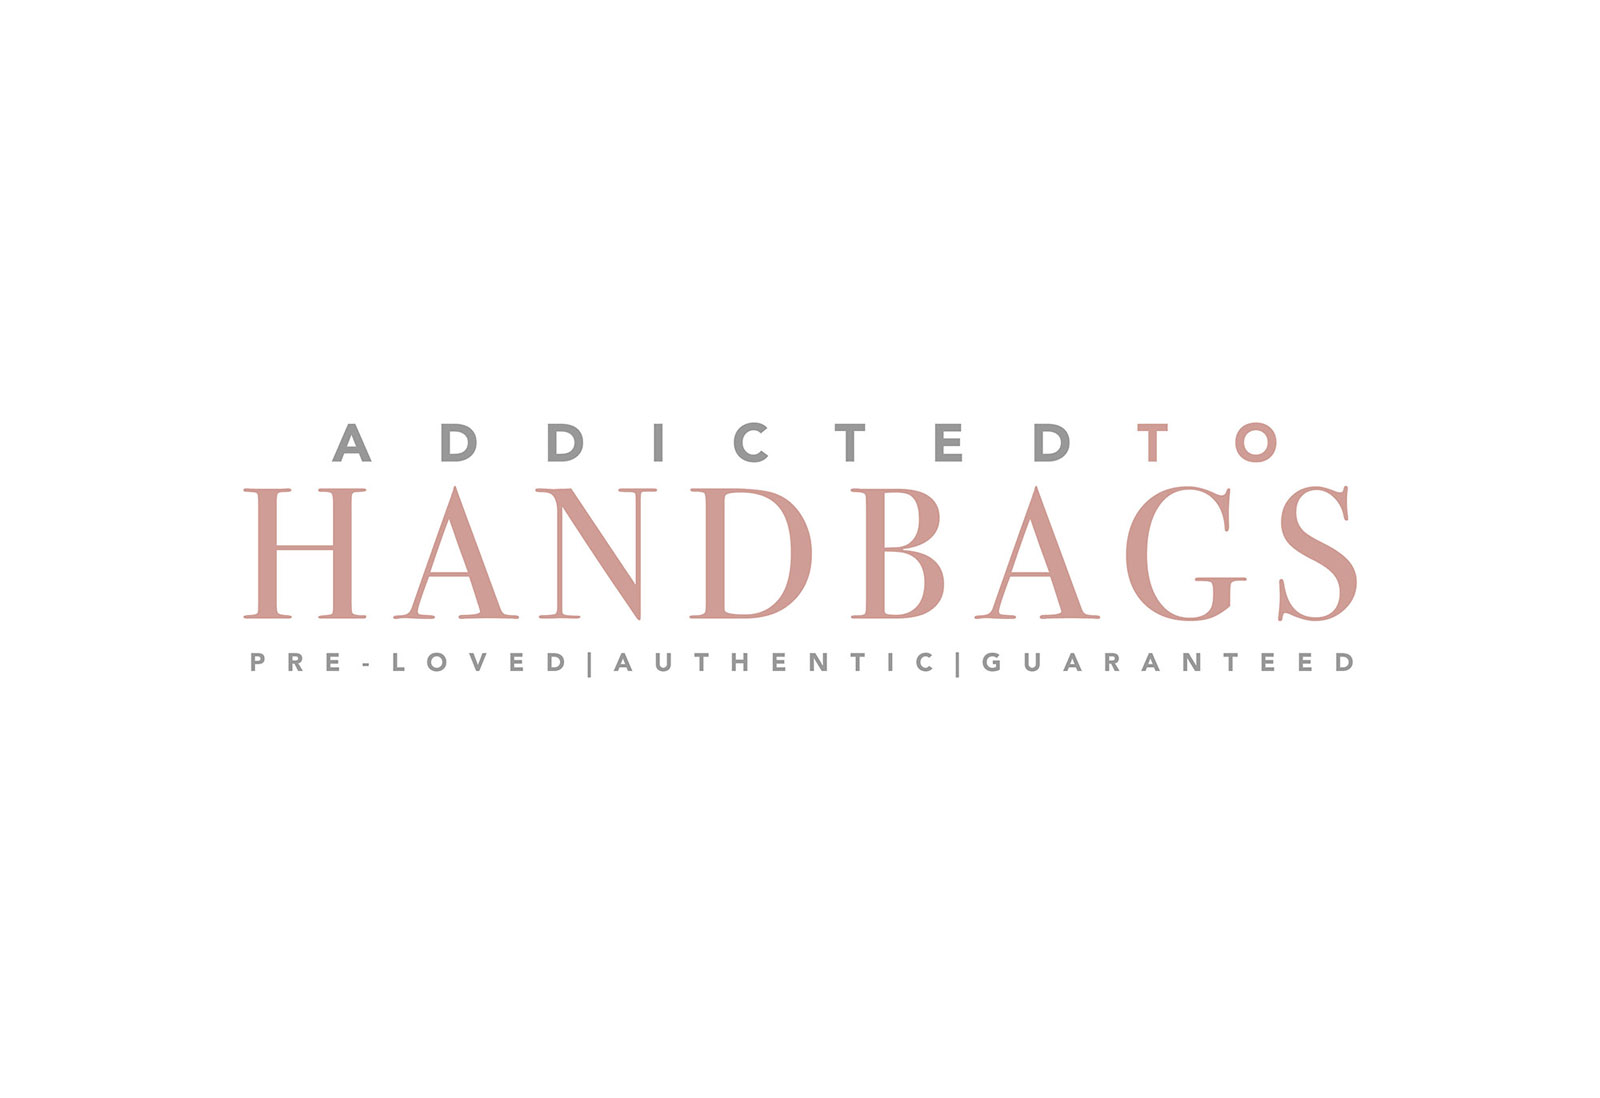 Developed Concept v2 - Addicted to Handbags